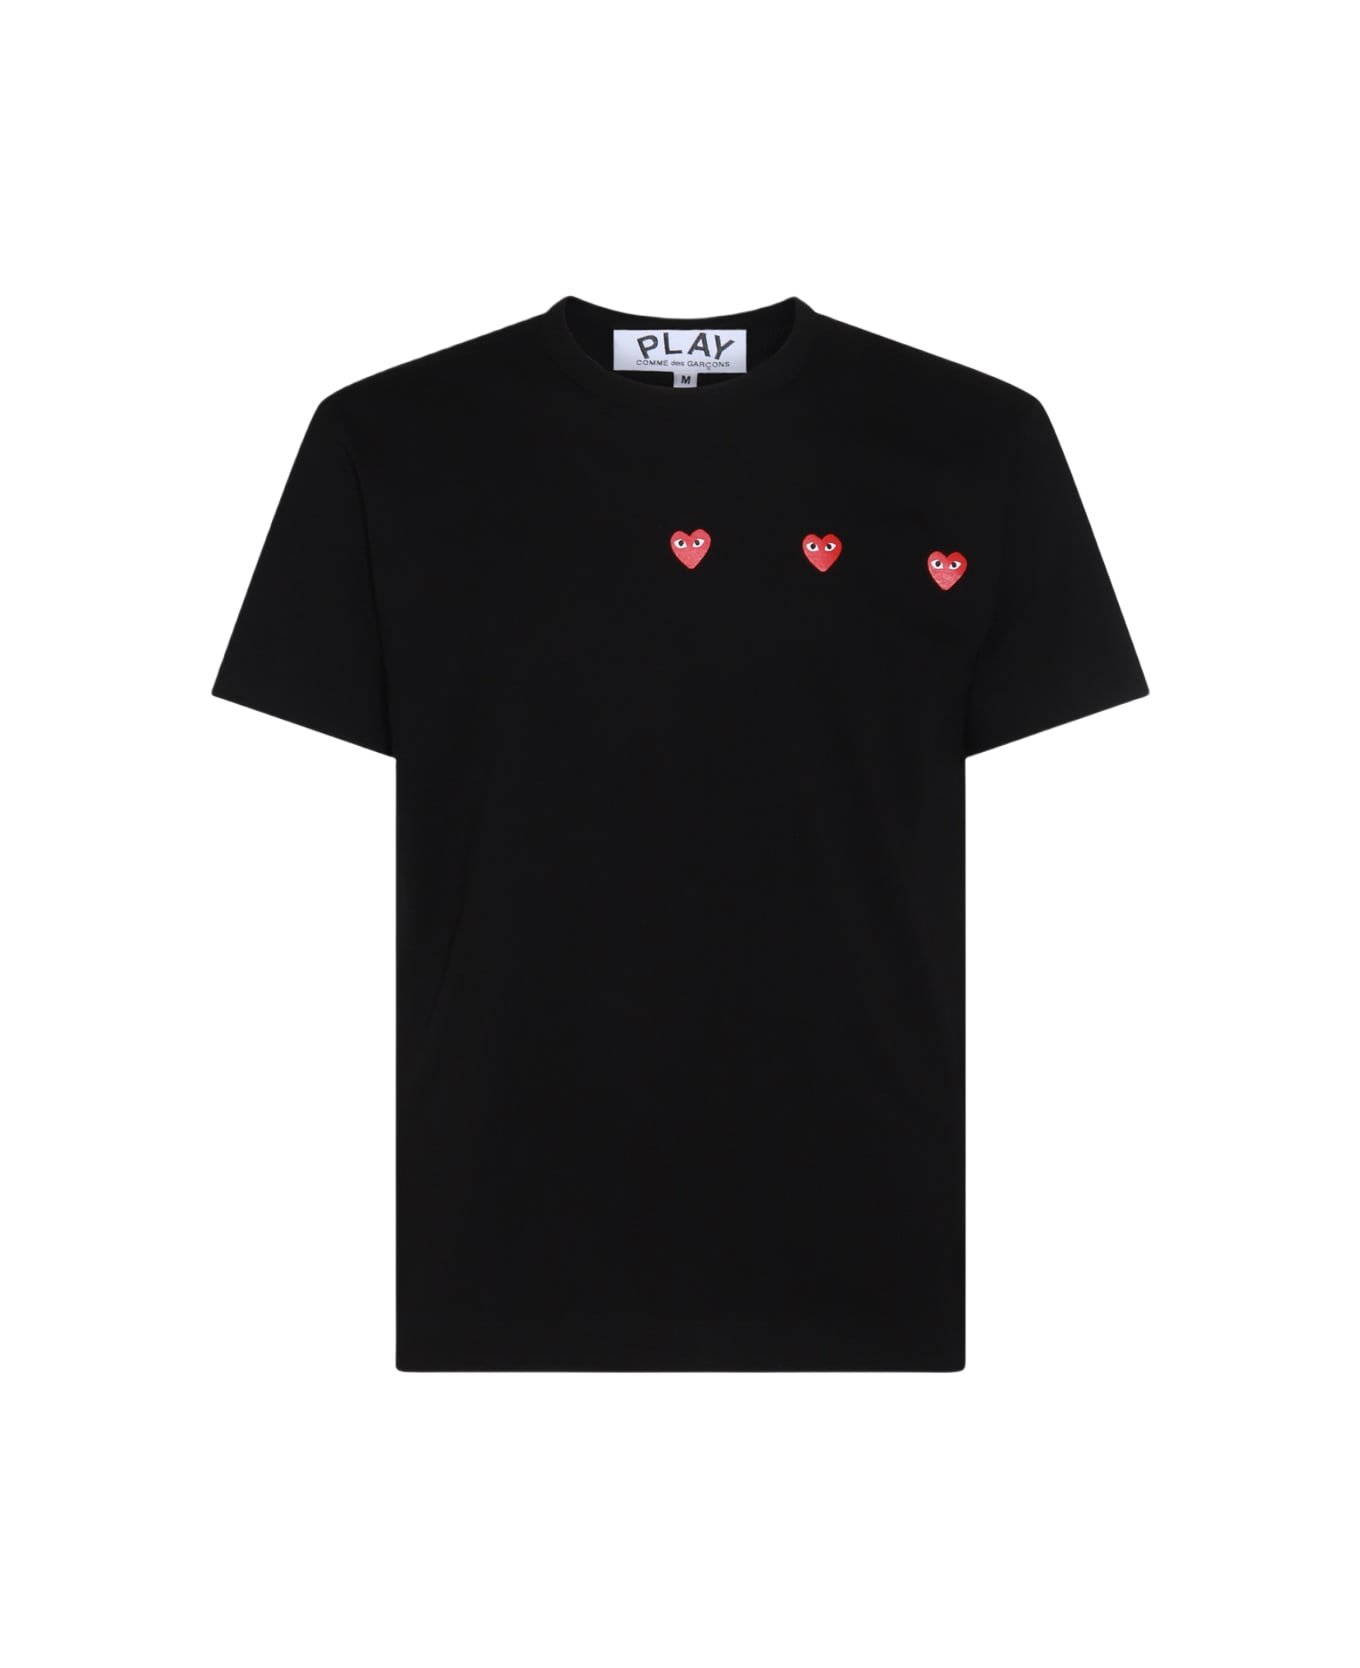 Comme des Garçons Play Black And Red Cotton Play T-shirt - Black